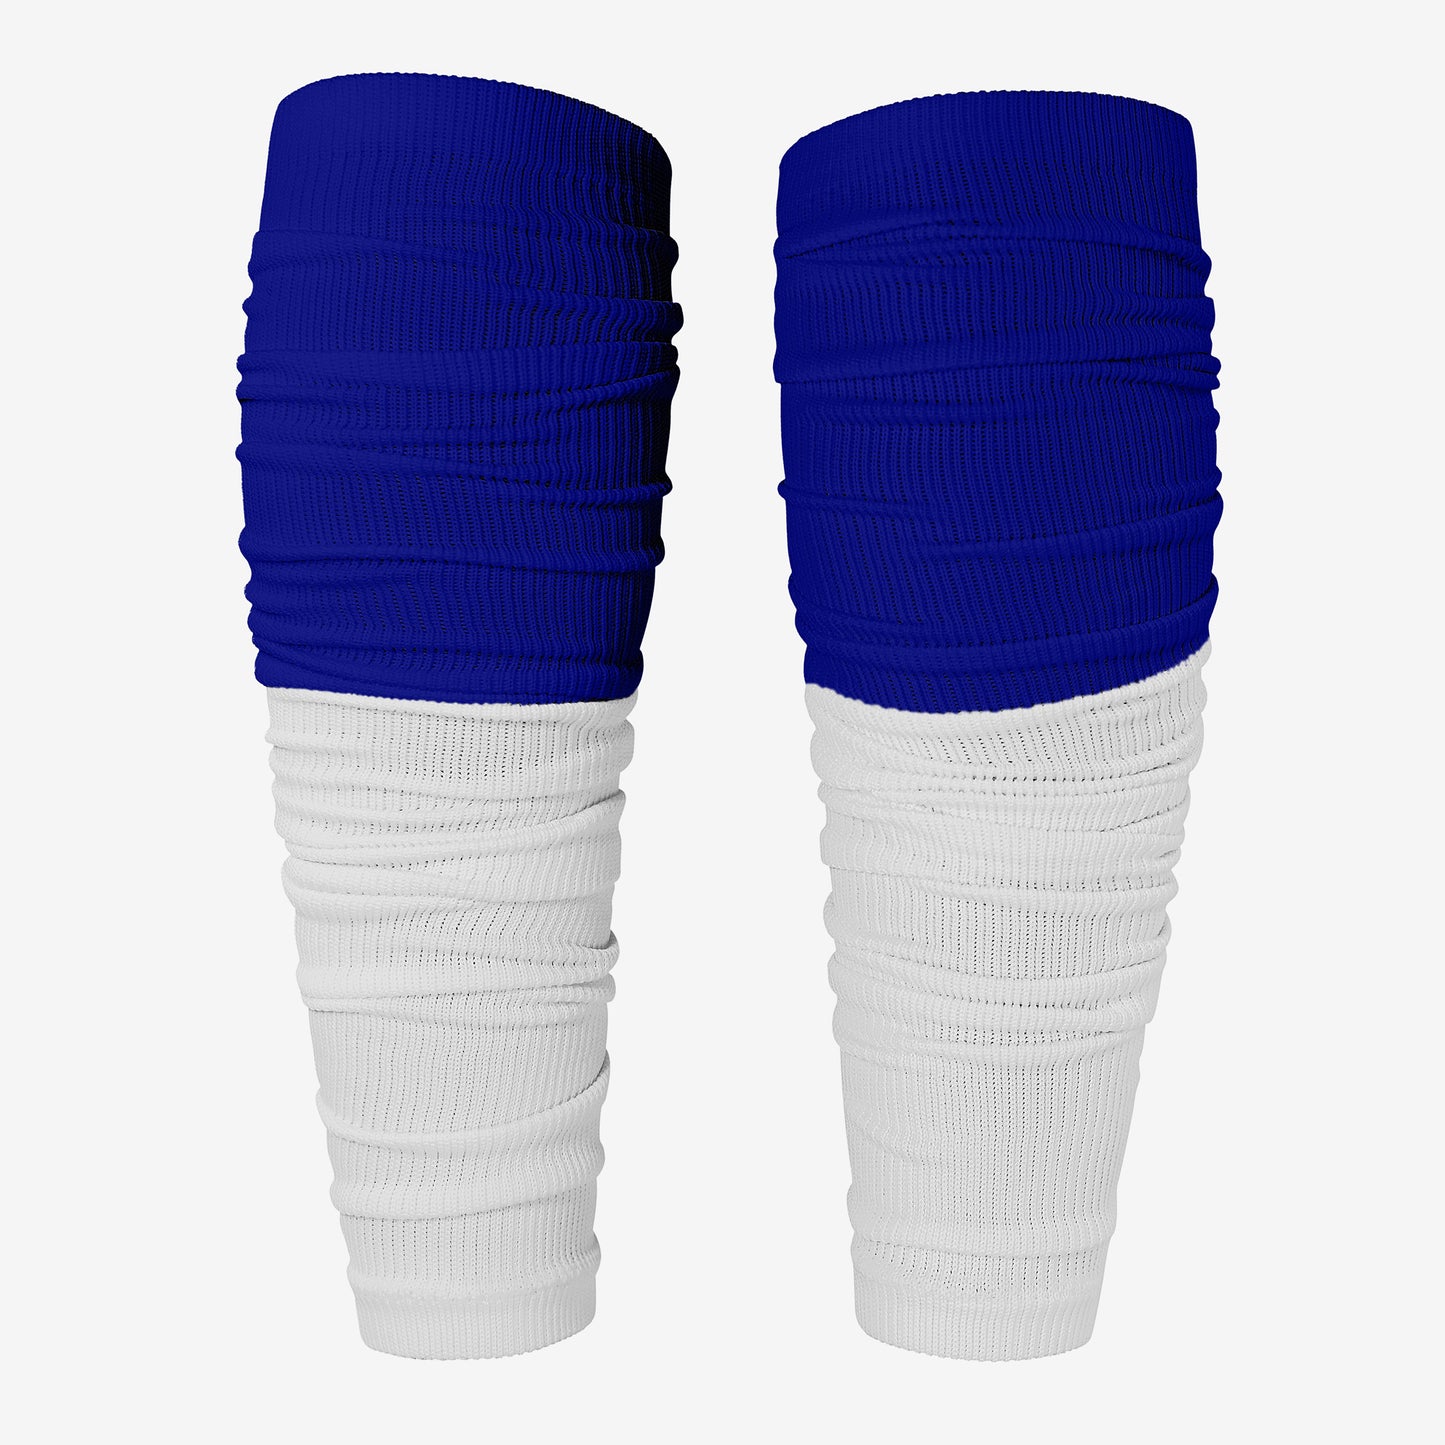 TWO-TONE FOOTBALL LEG SLEEVES 2.0 (BLUE/WHITE)